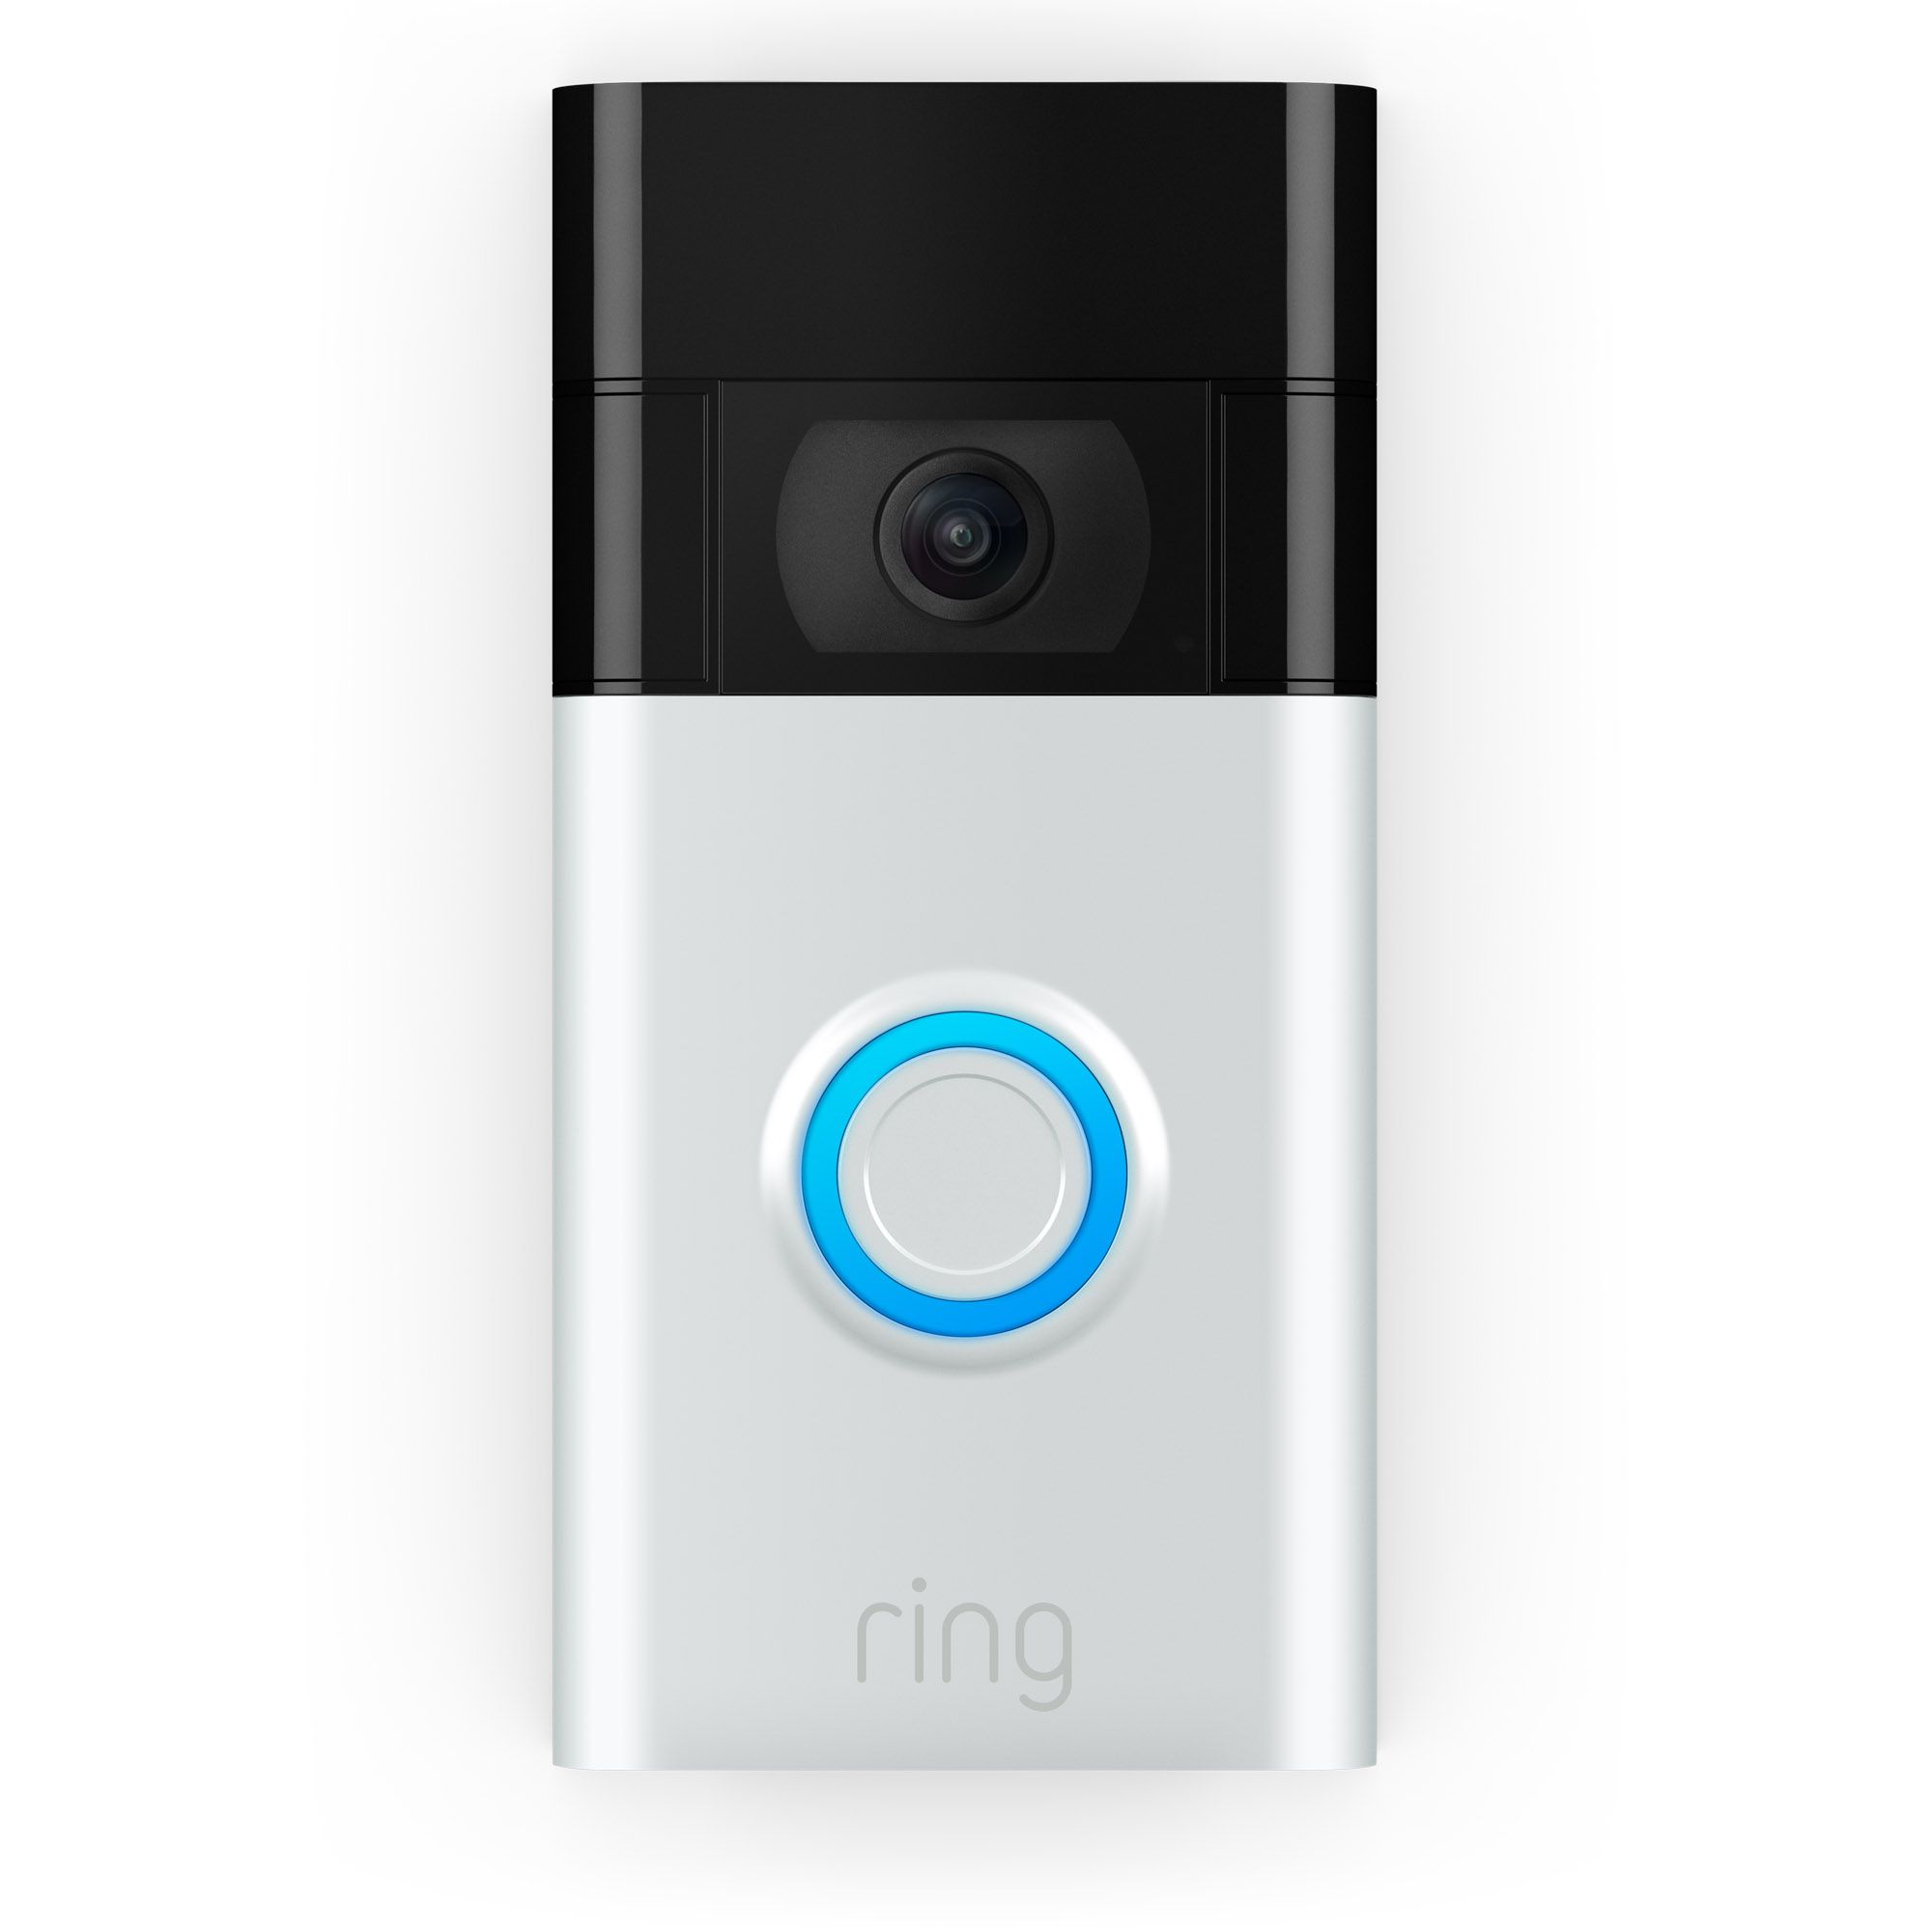 Ring (2nd Gen) Satin nickel Wireless Video doorbell